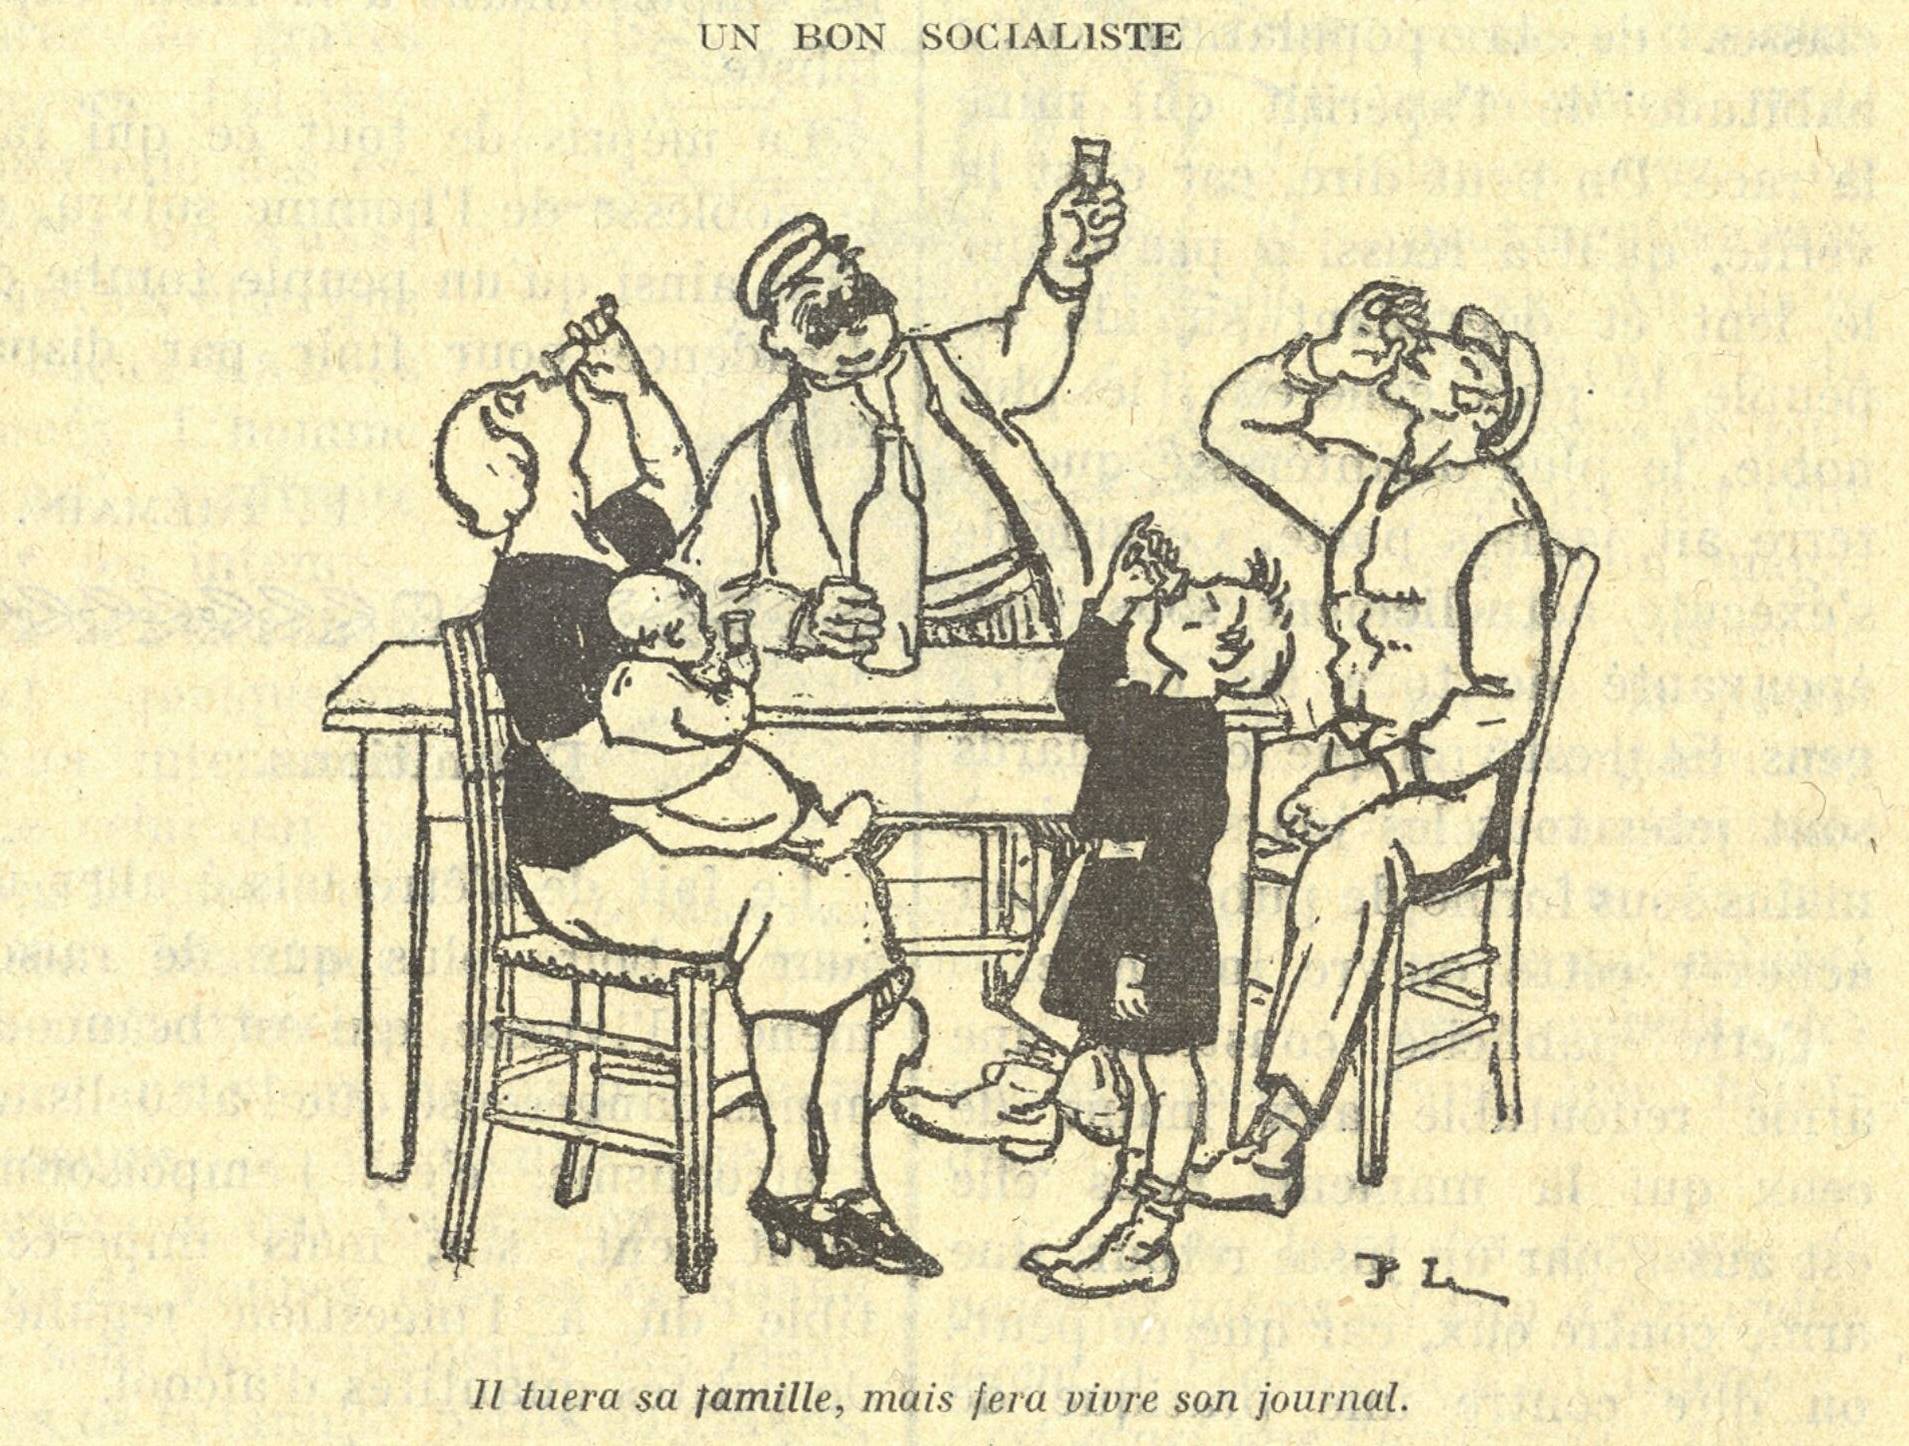 "Il tuera sa famille, mais fera vivre son journal", La Jeunesse, 1932 - source : Gallica-BnF